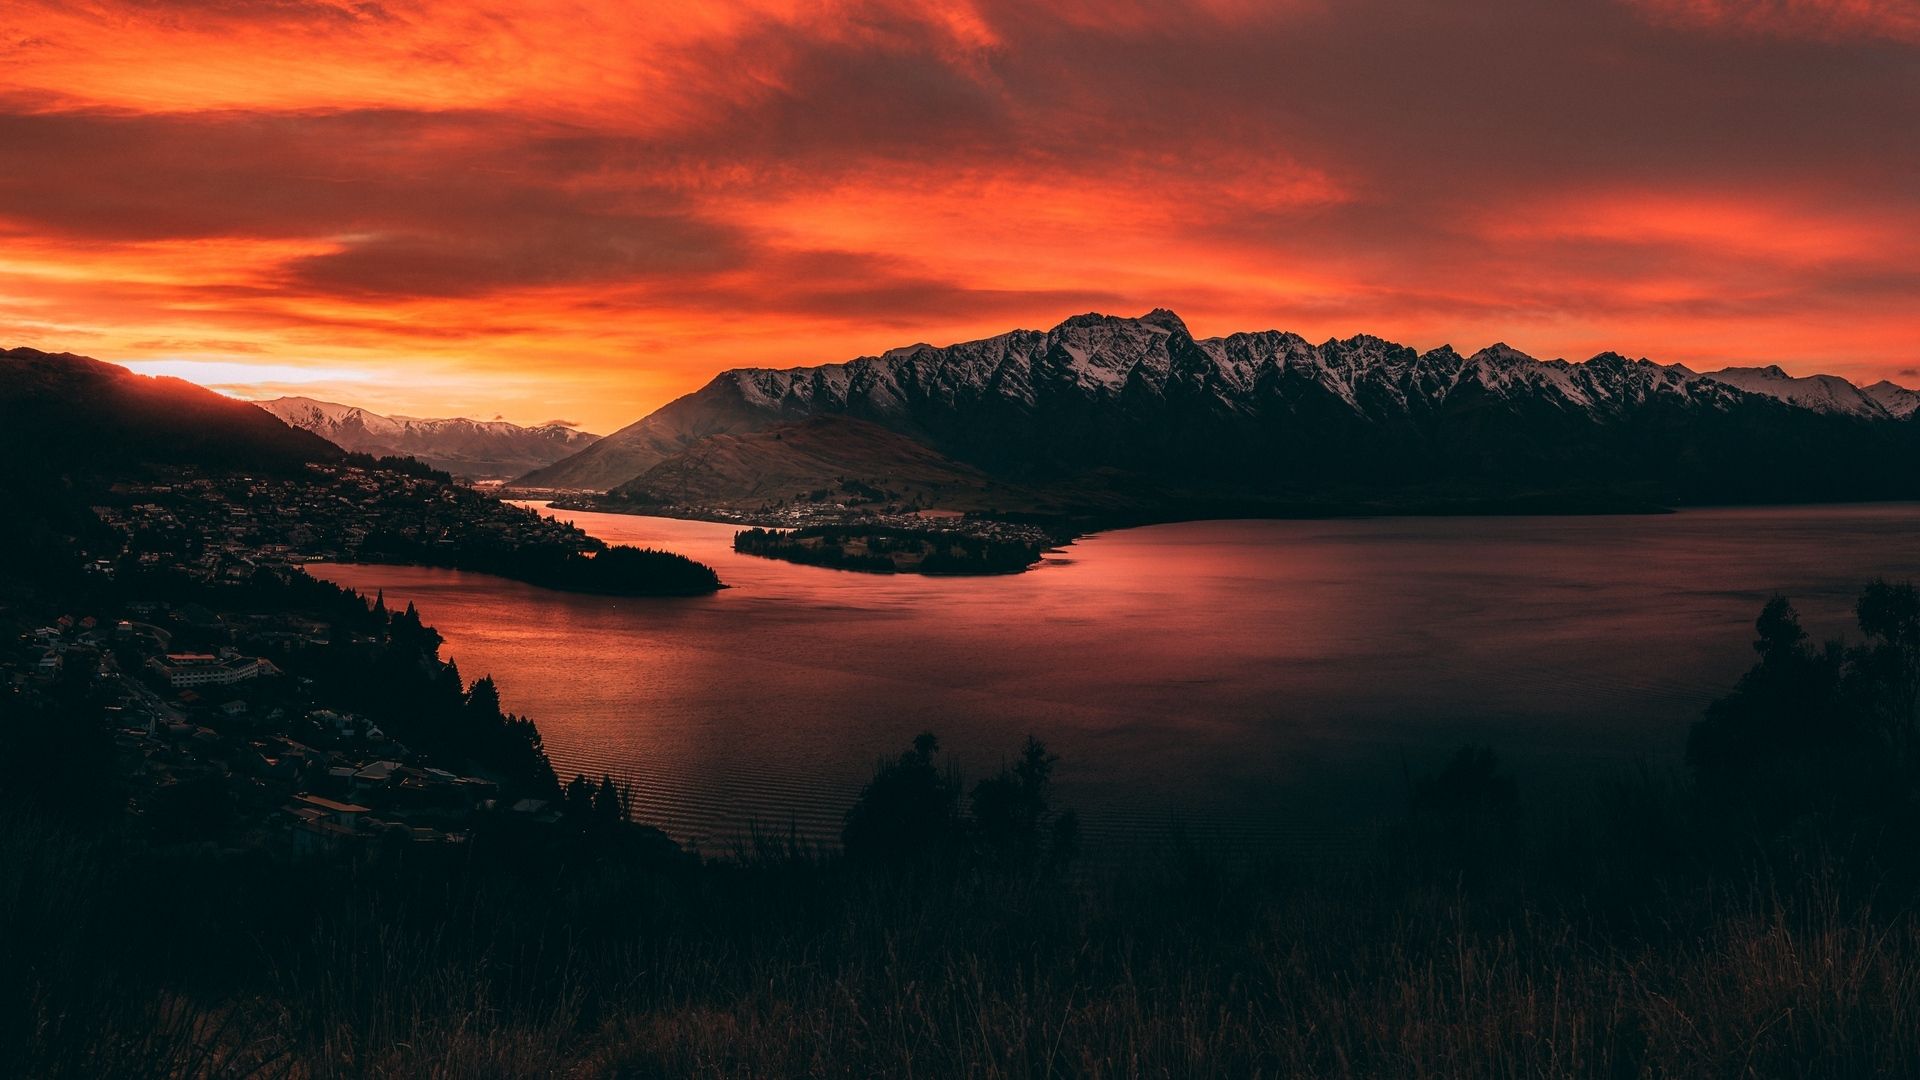 New Zealand Orange Mountain Sunset Wallpaper, HD City 4K Wallpaper, Image, Photo and Background